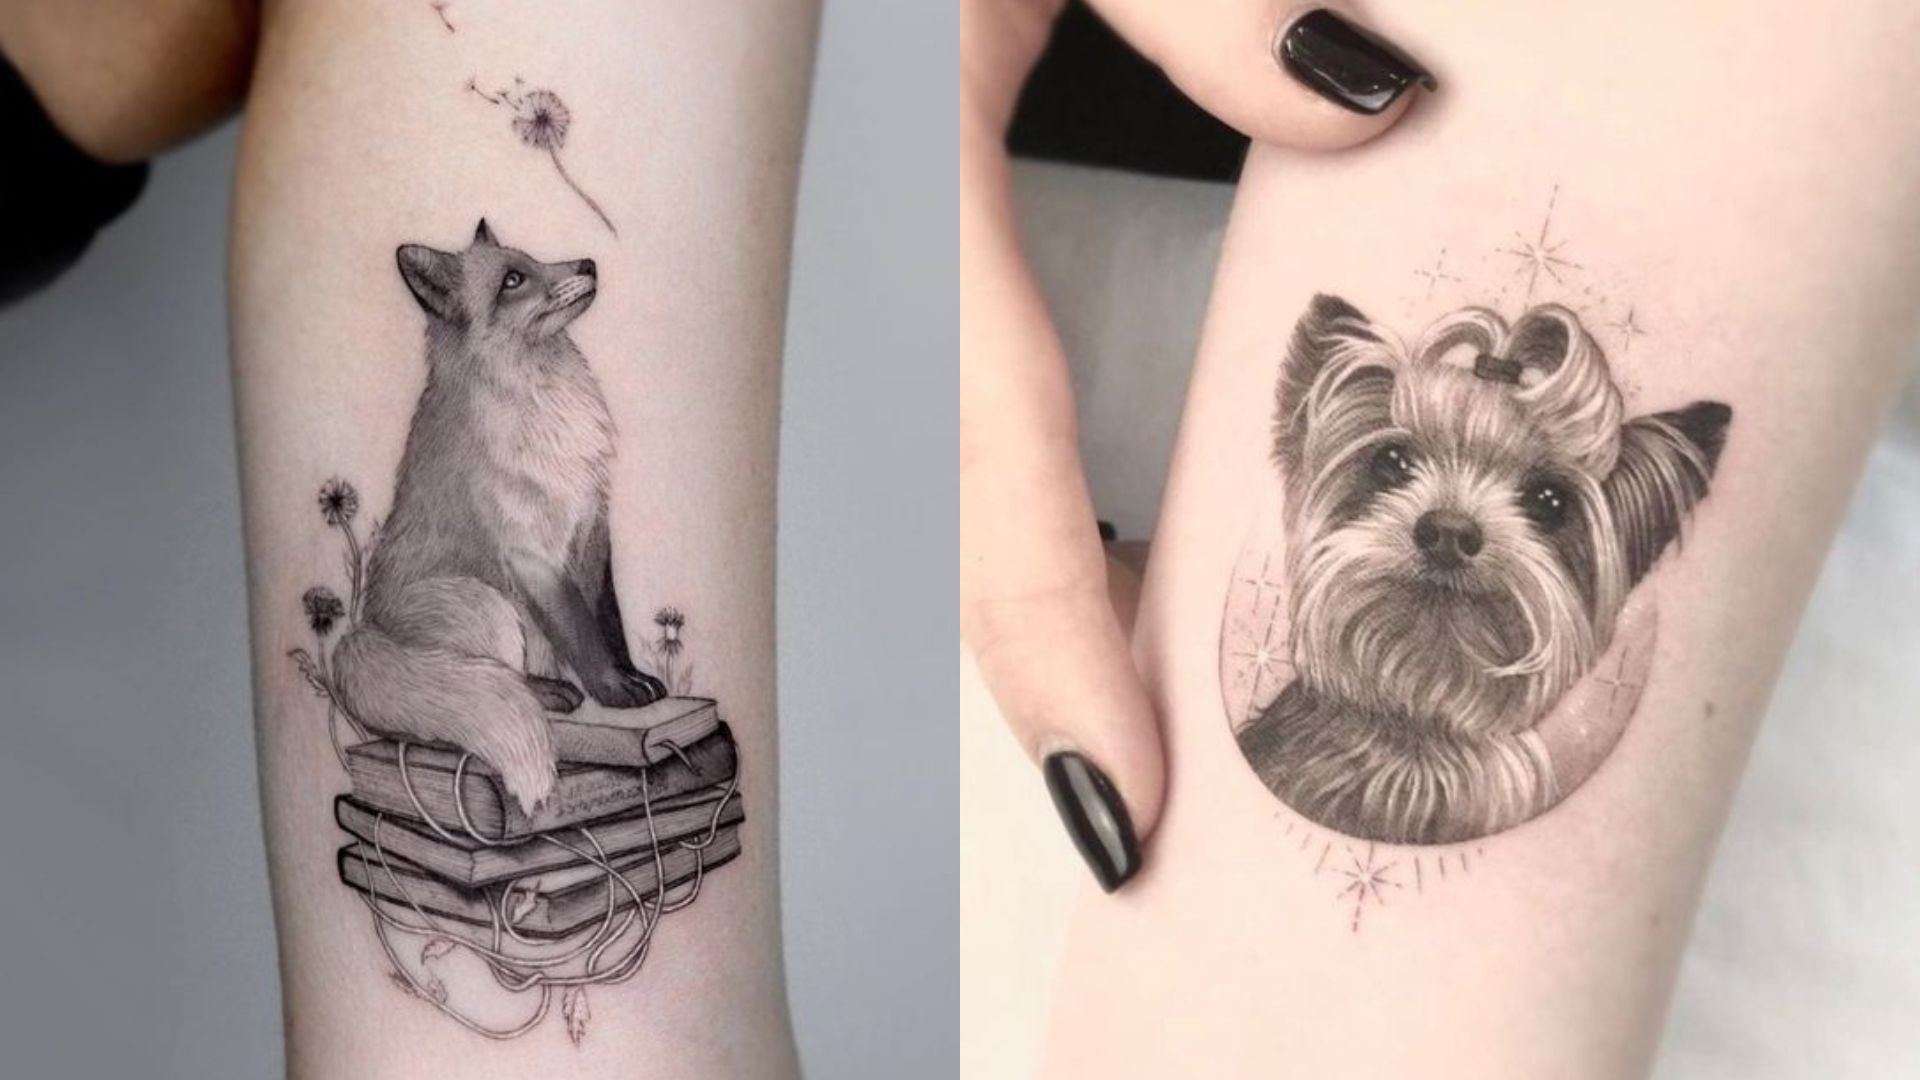 Fine-line tattoos of animals